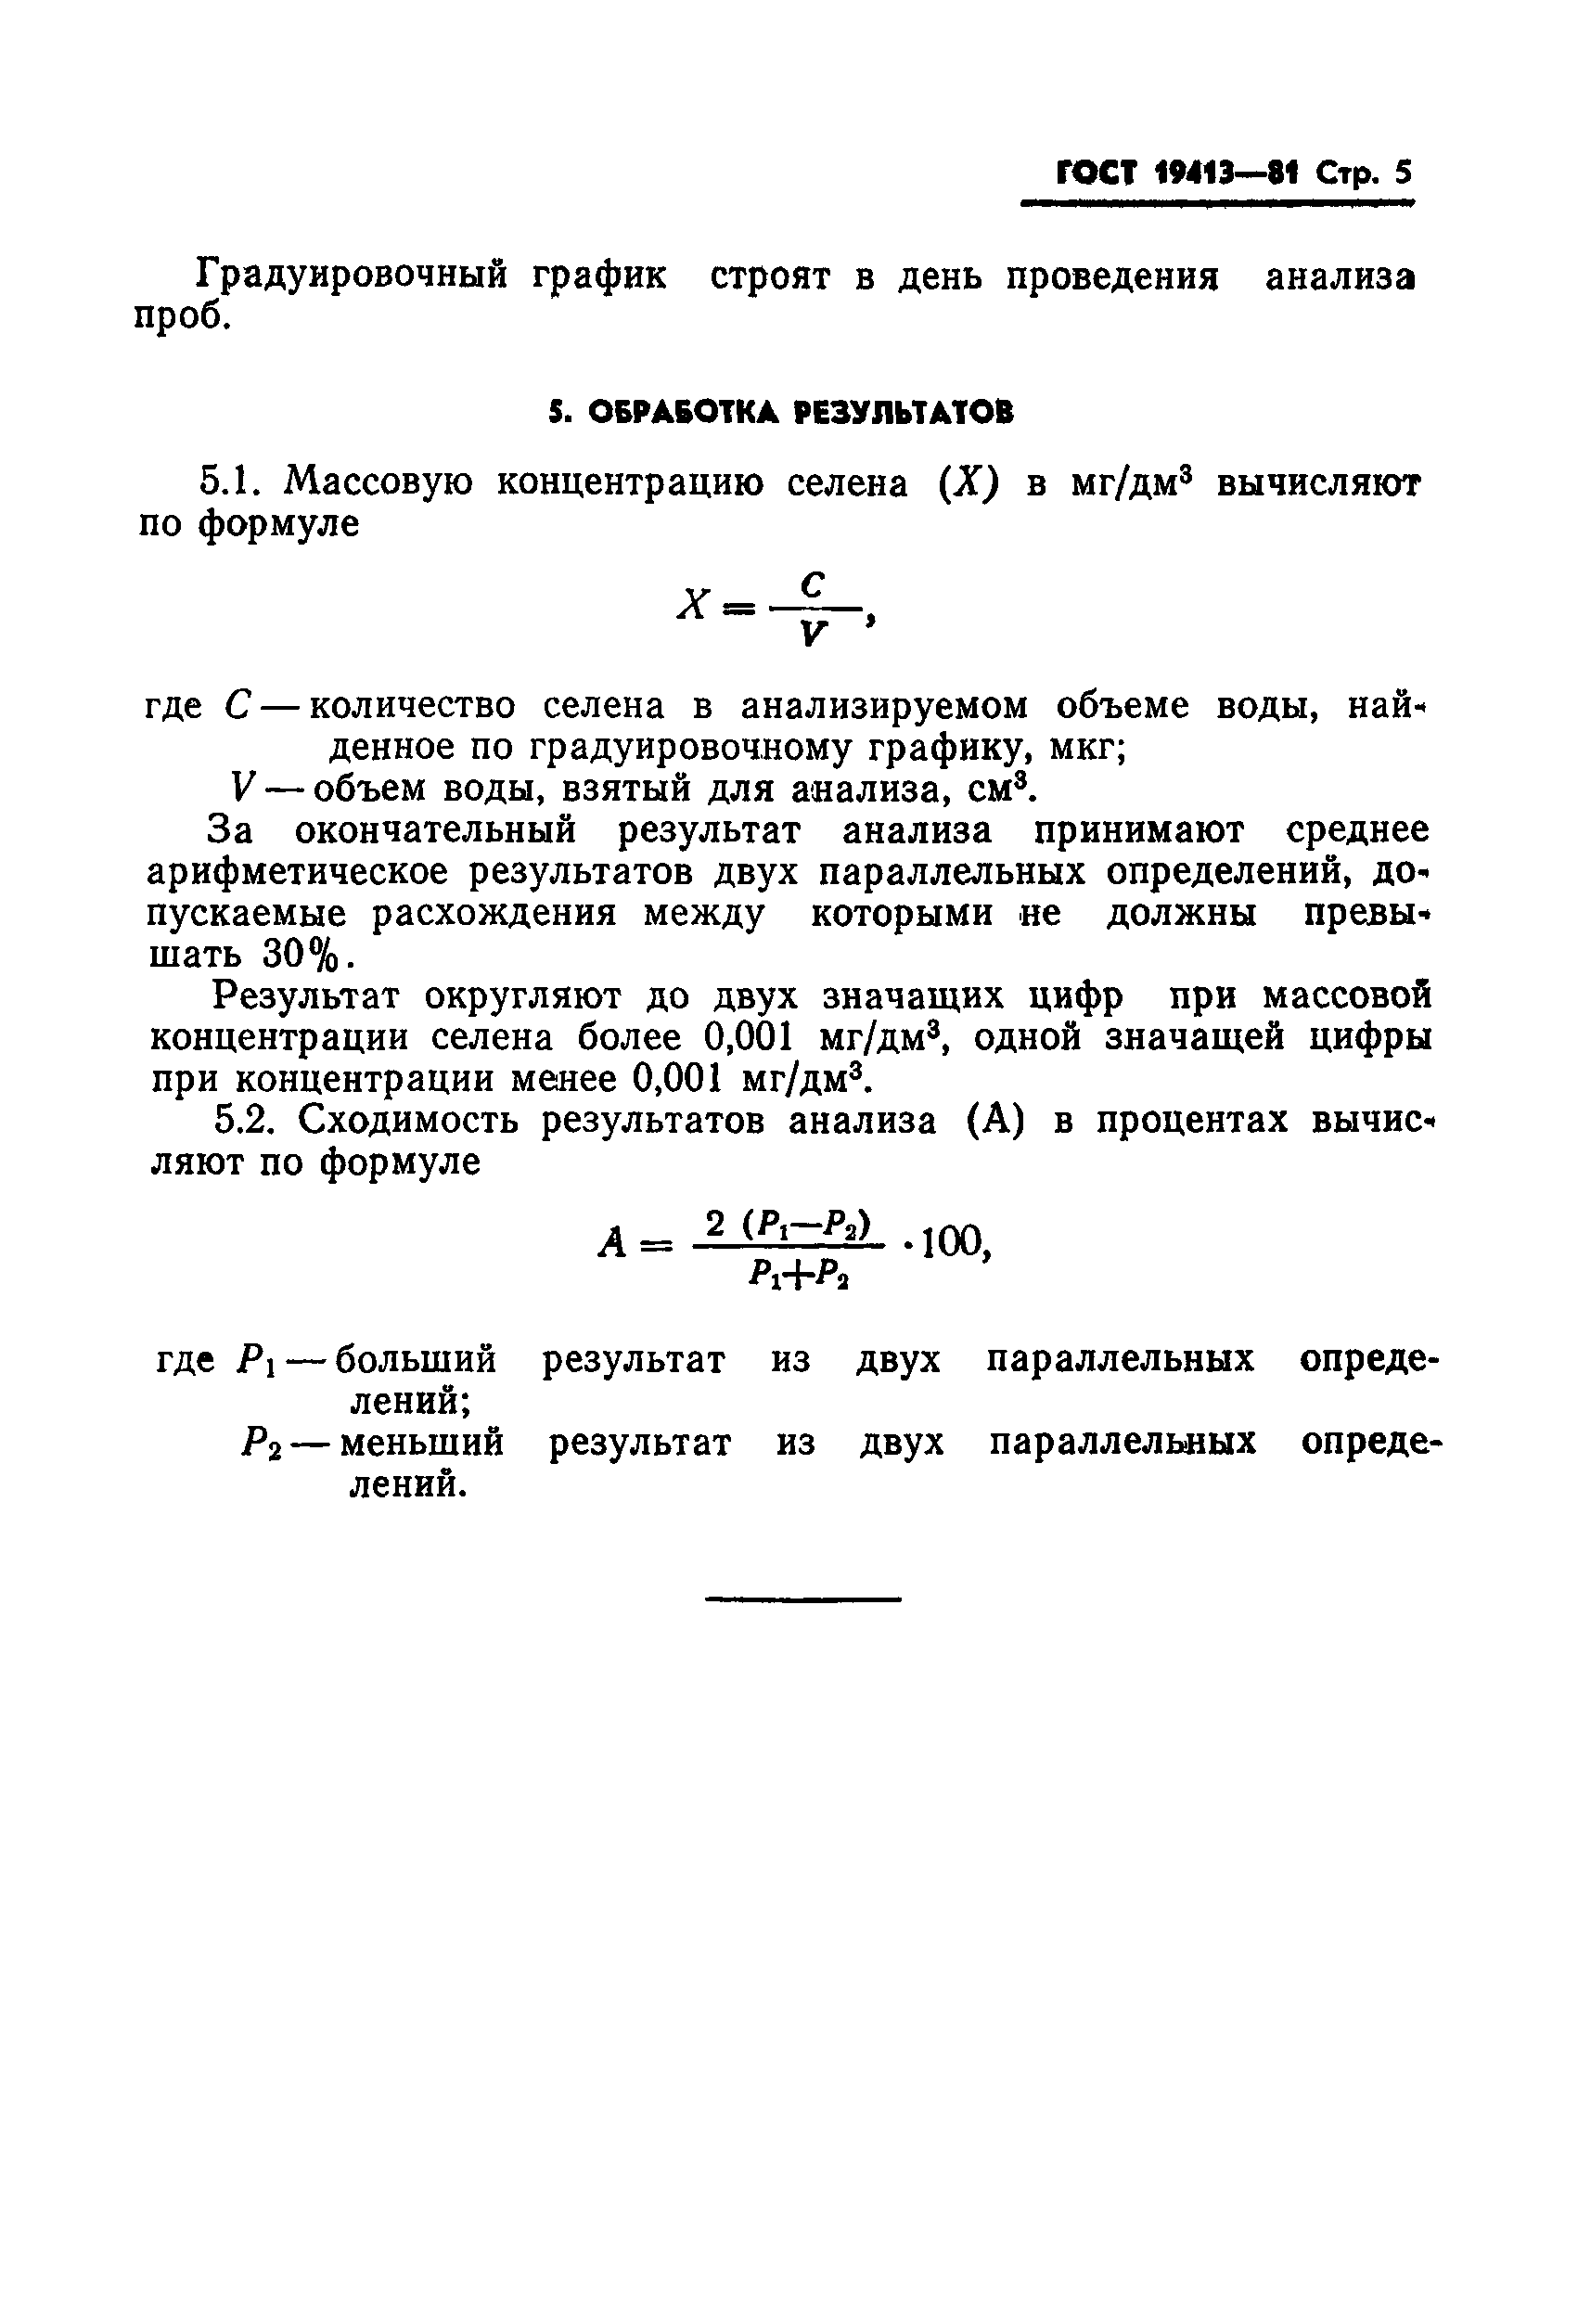 ГОСТ 19413-81